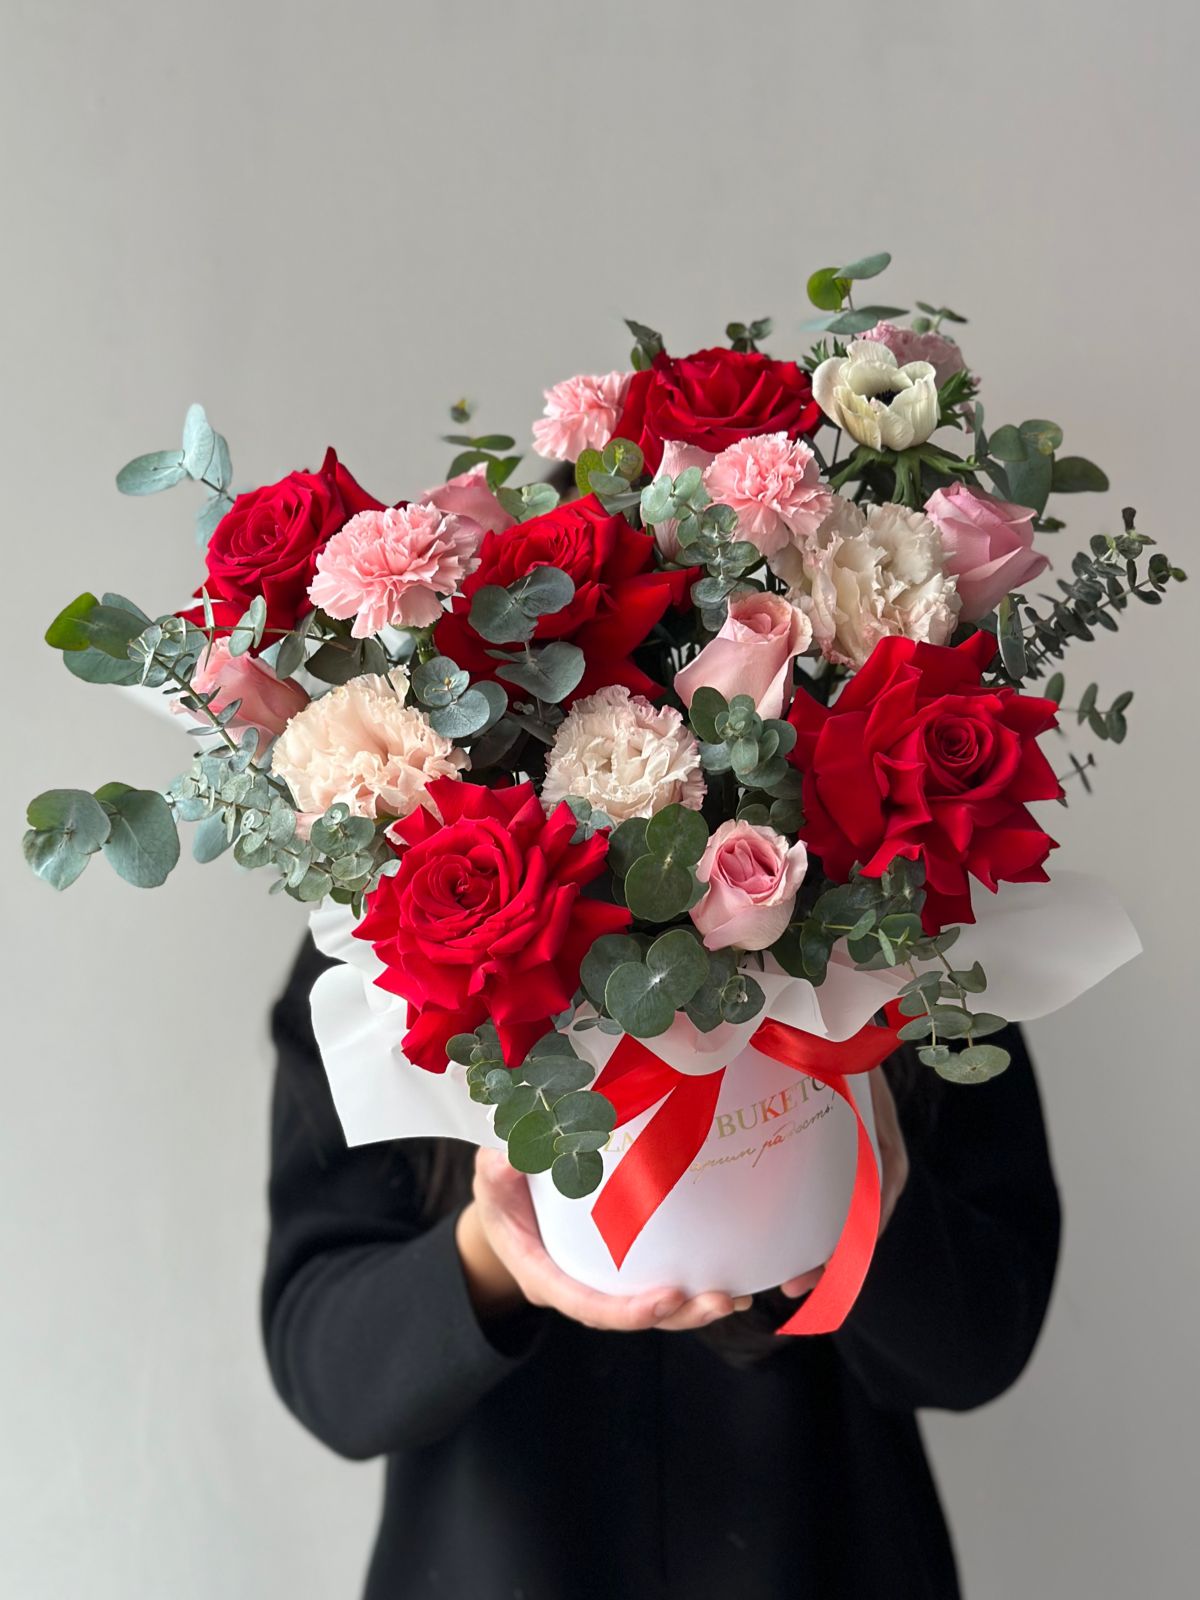 Композиция "Floral Serenity" из роз, гвоздик и лизиантусов